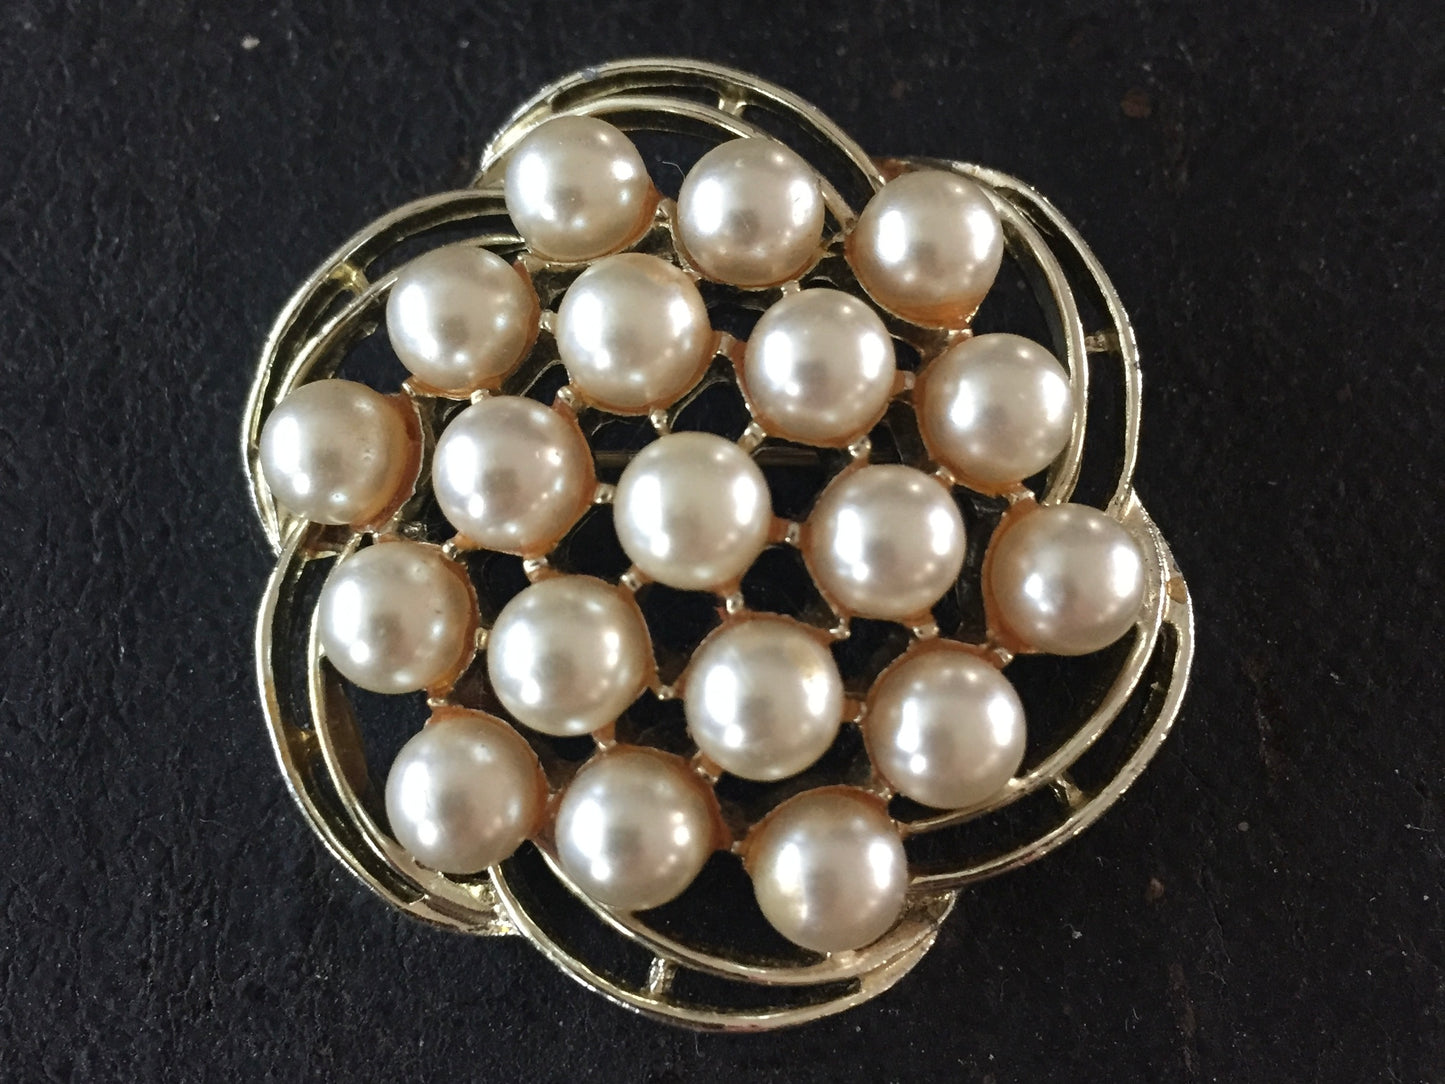 Stunning Vintage Pearl Brooch